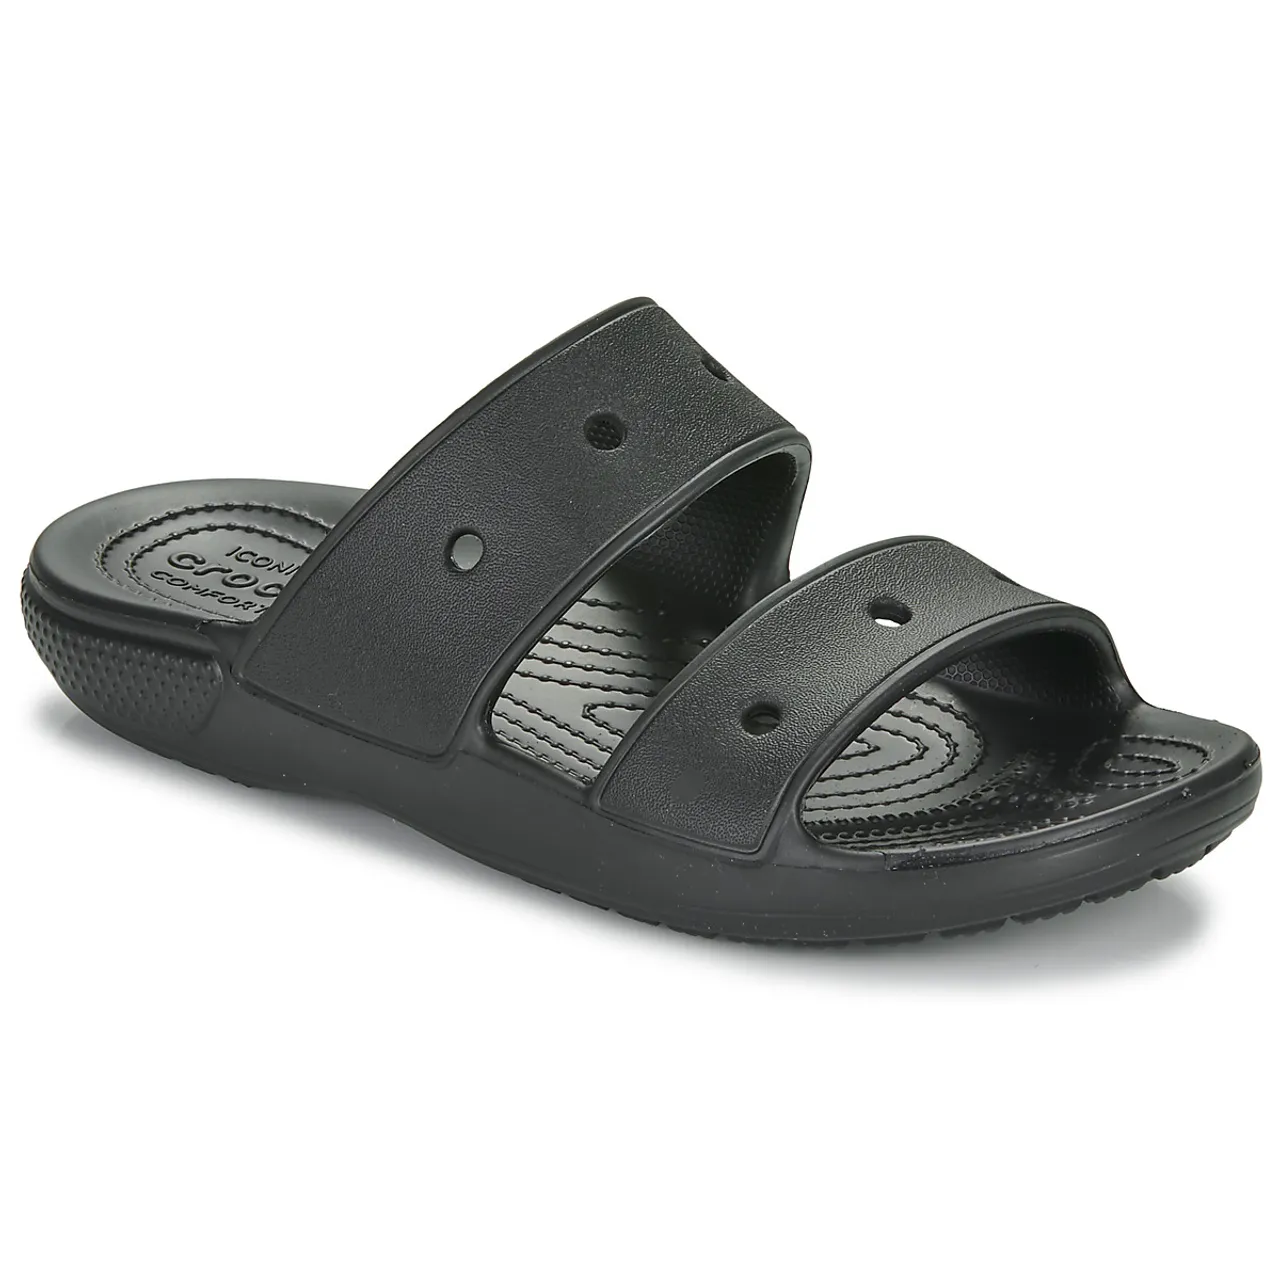 Crocs  CLASSIC CROCS SANDAL  women's Mules / Casual Shoes in Black